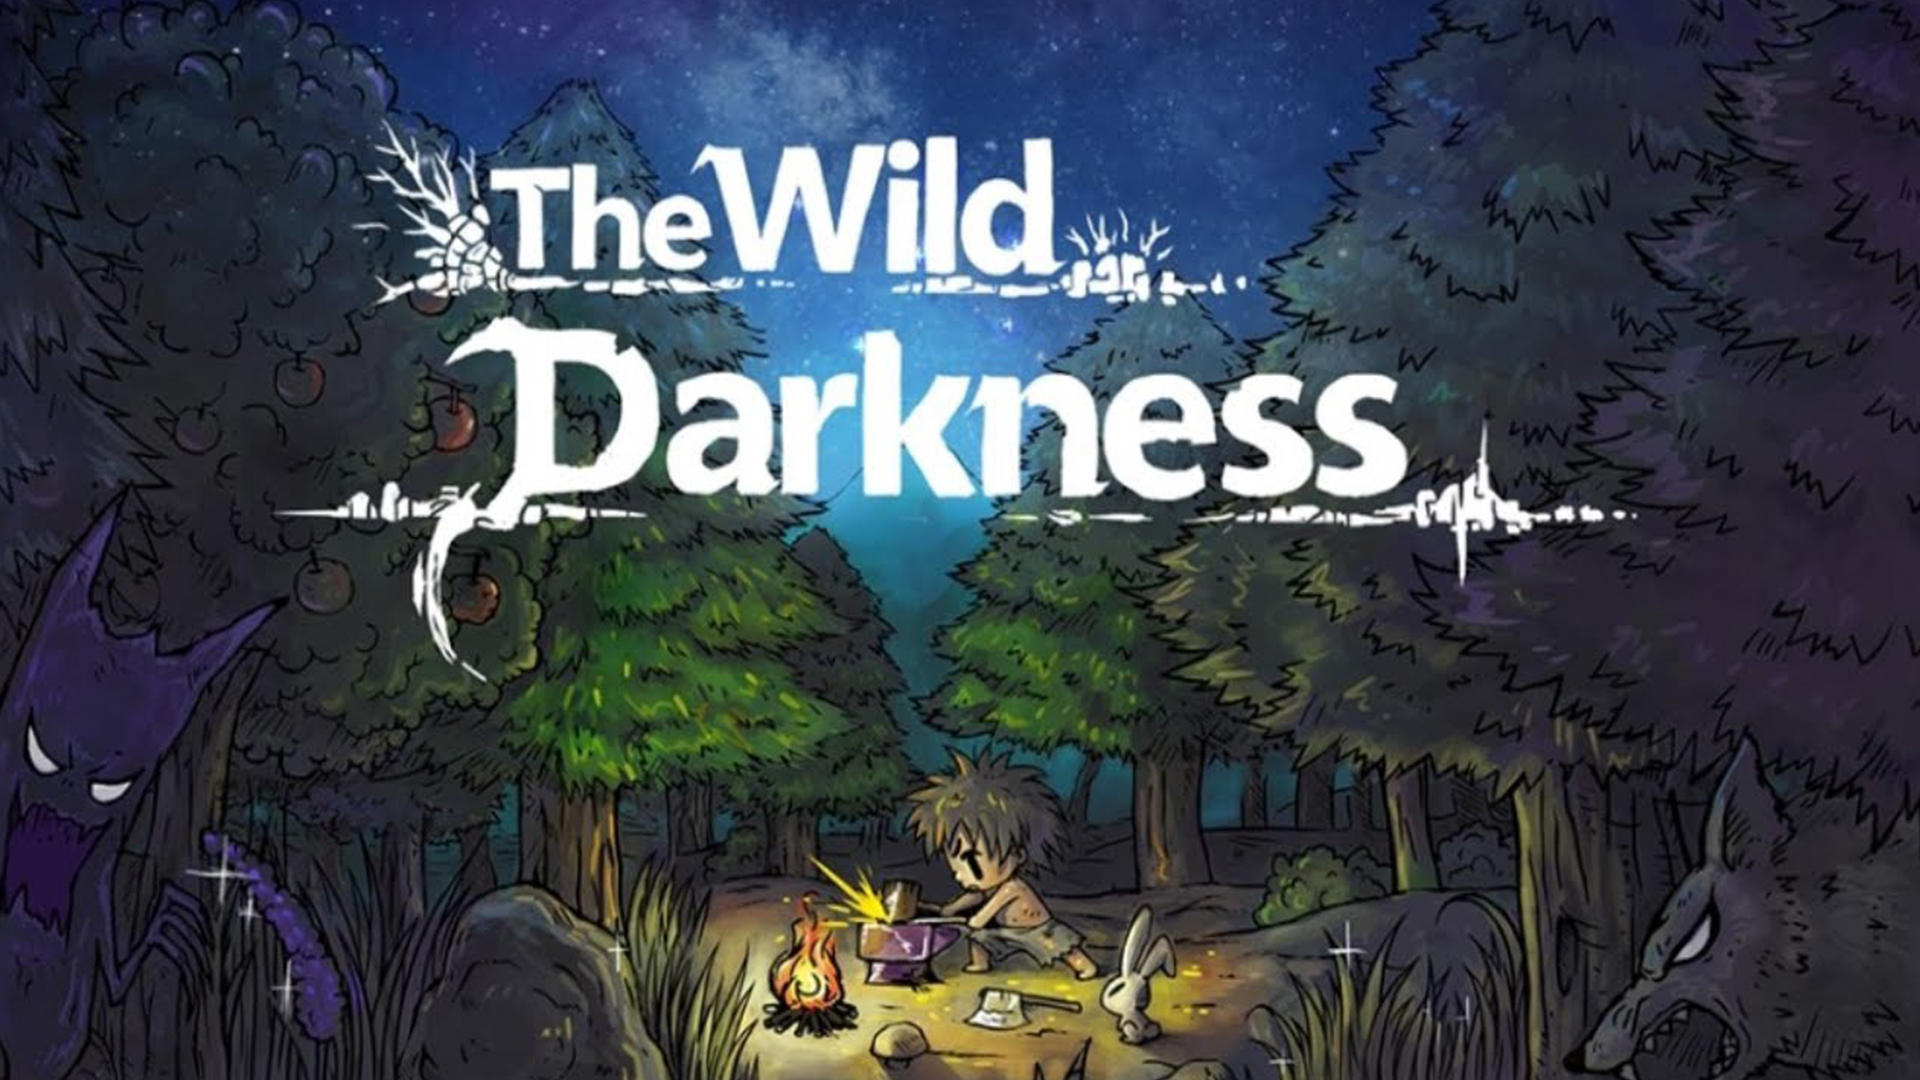 Banner of The Wild Darkness 